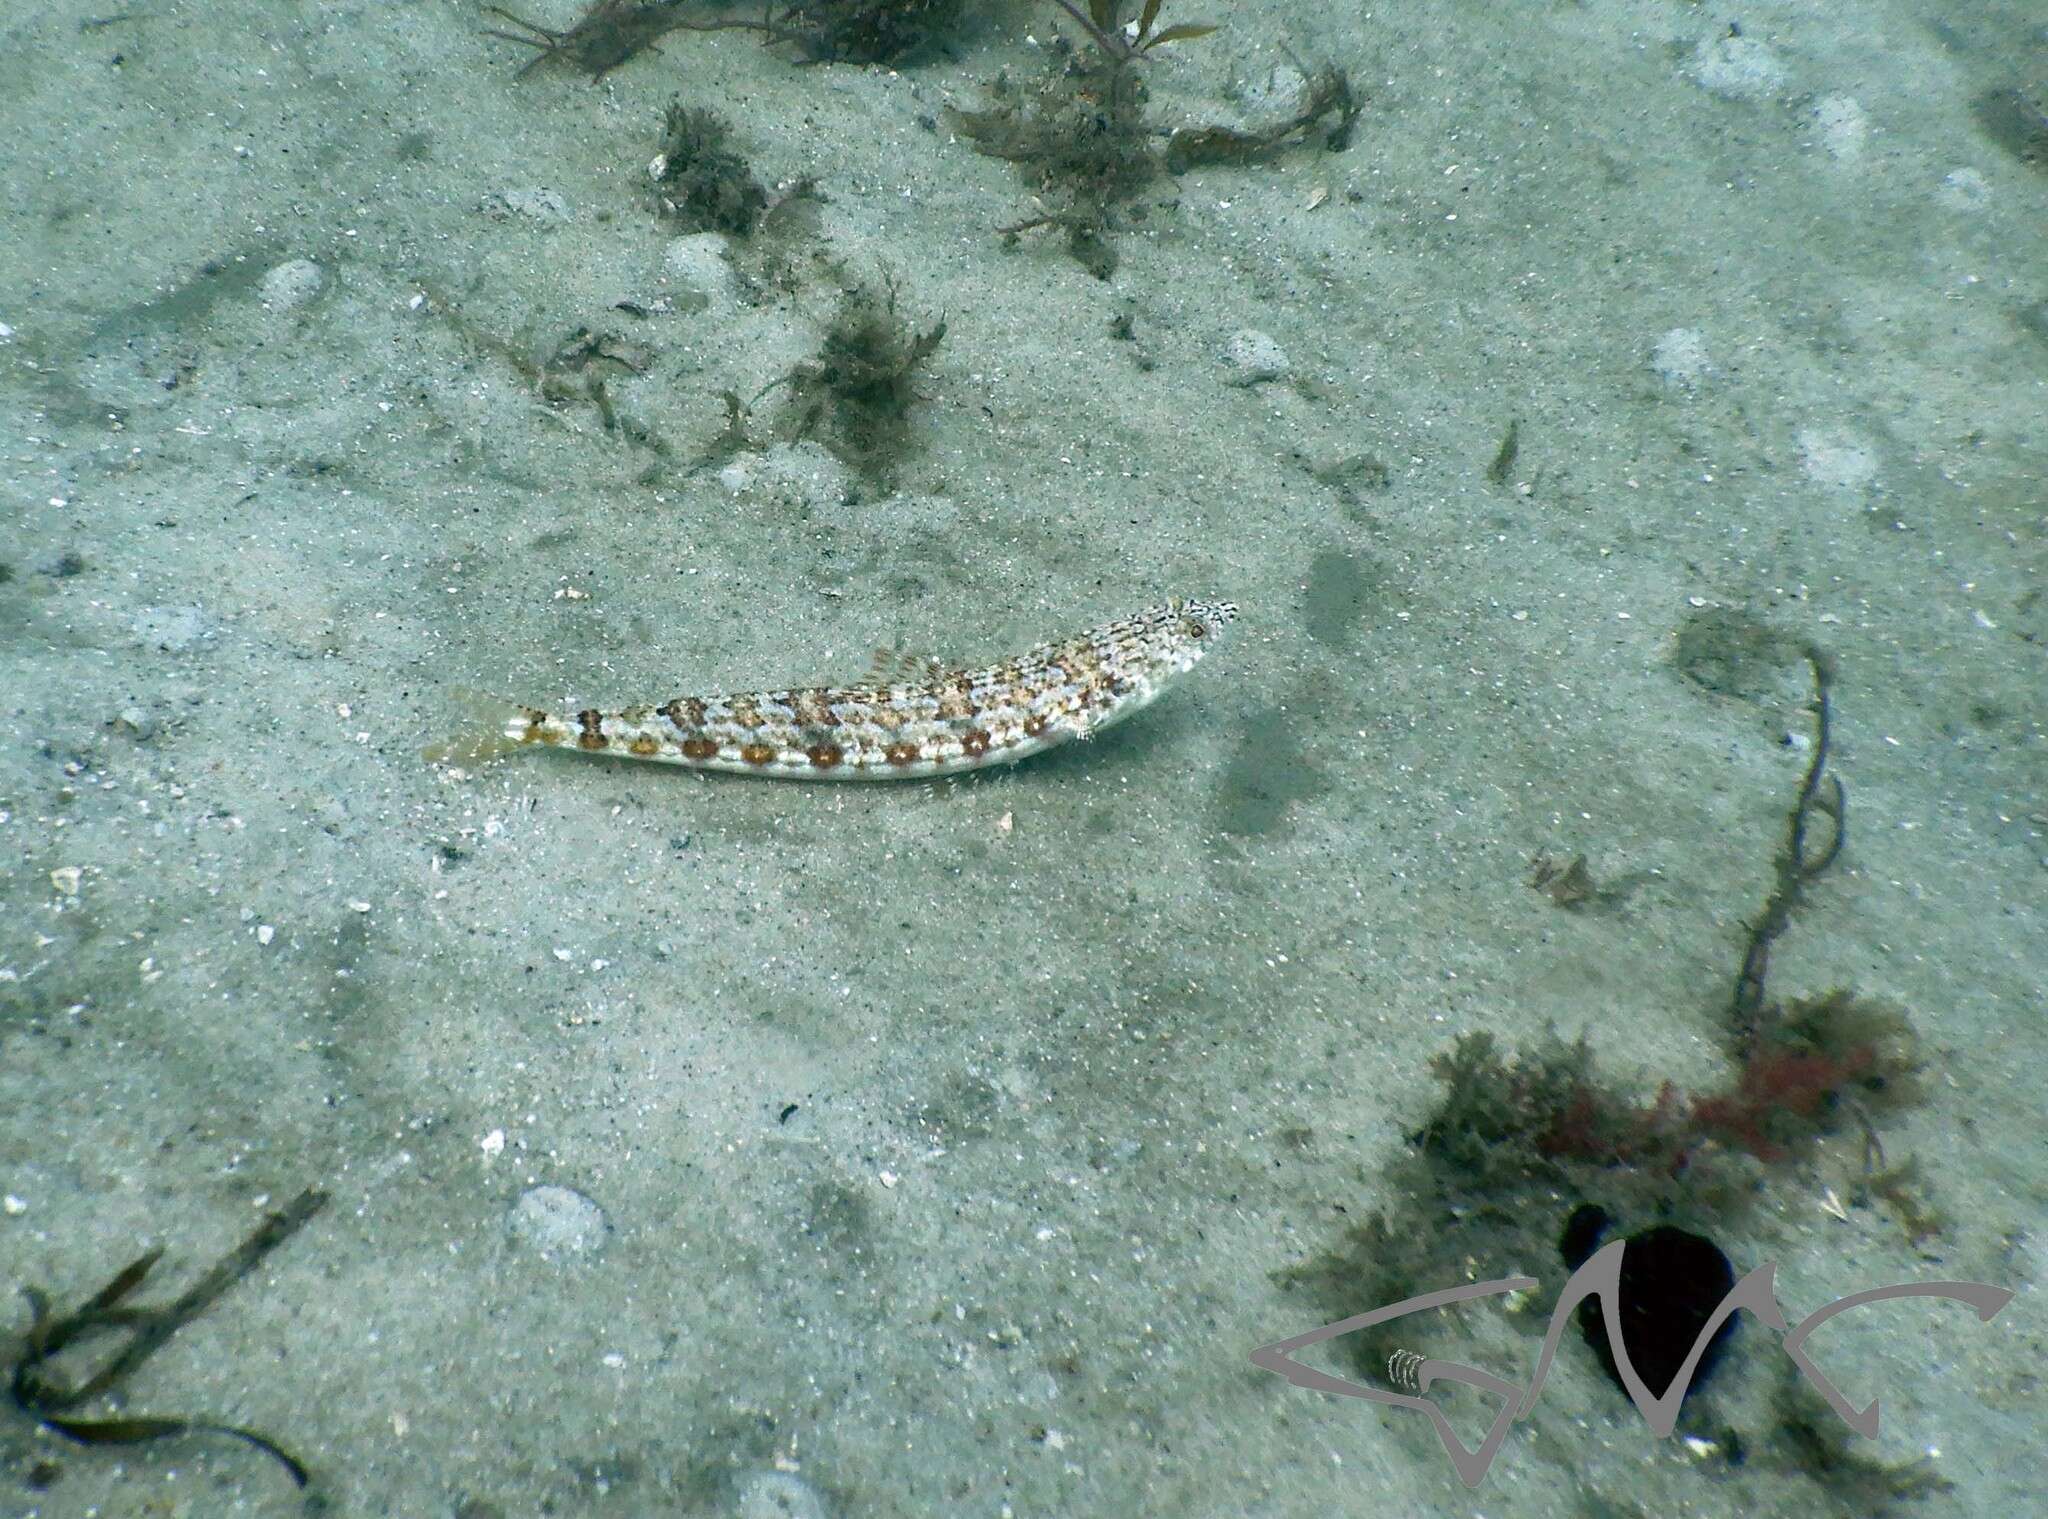 Image of Sand lizardfish